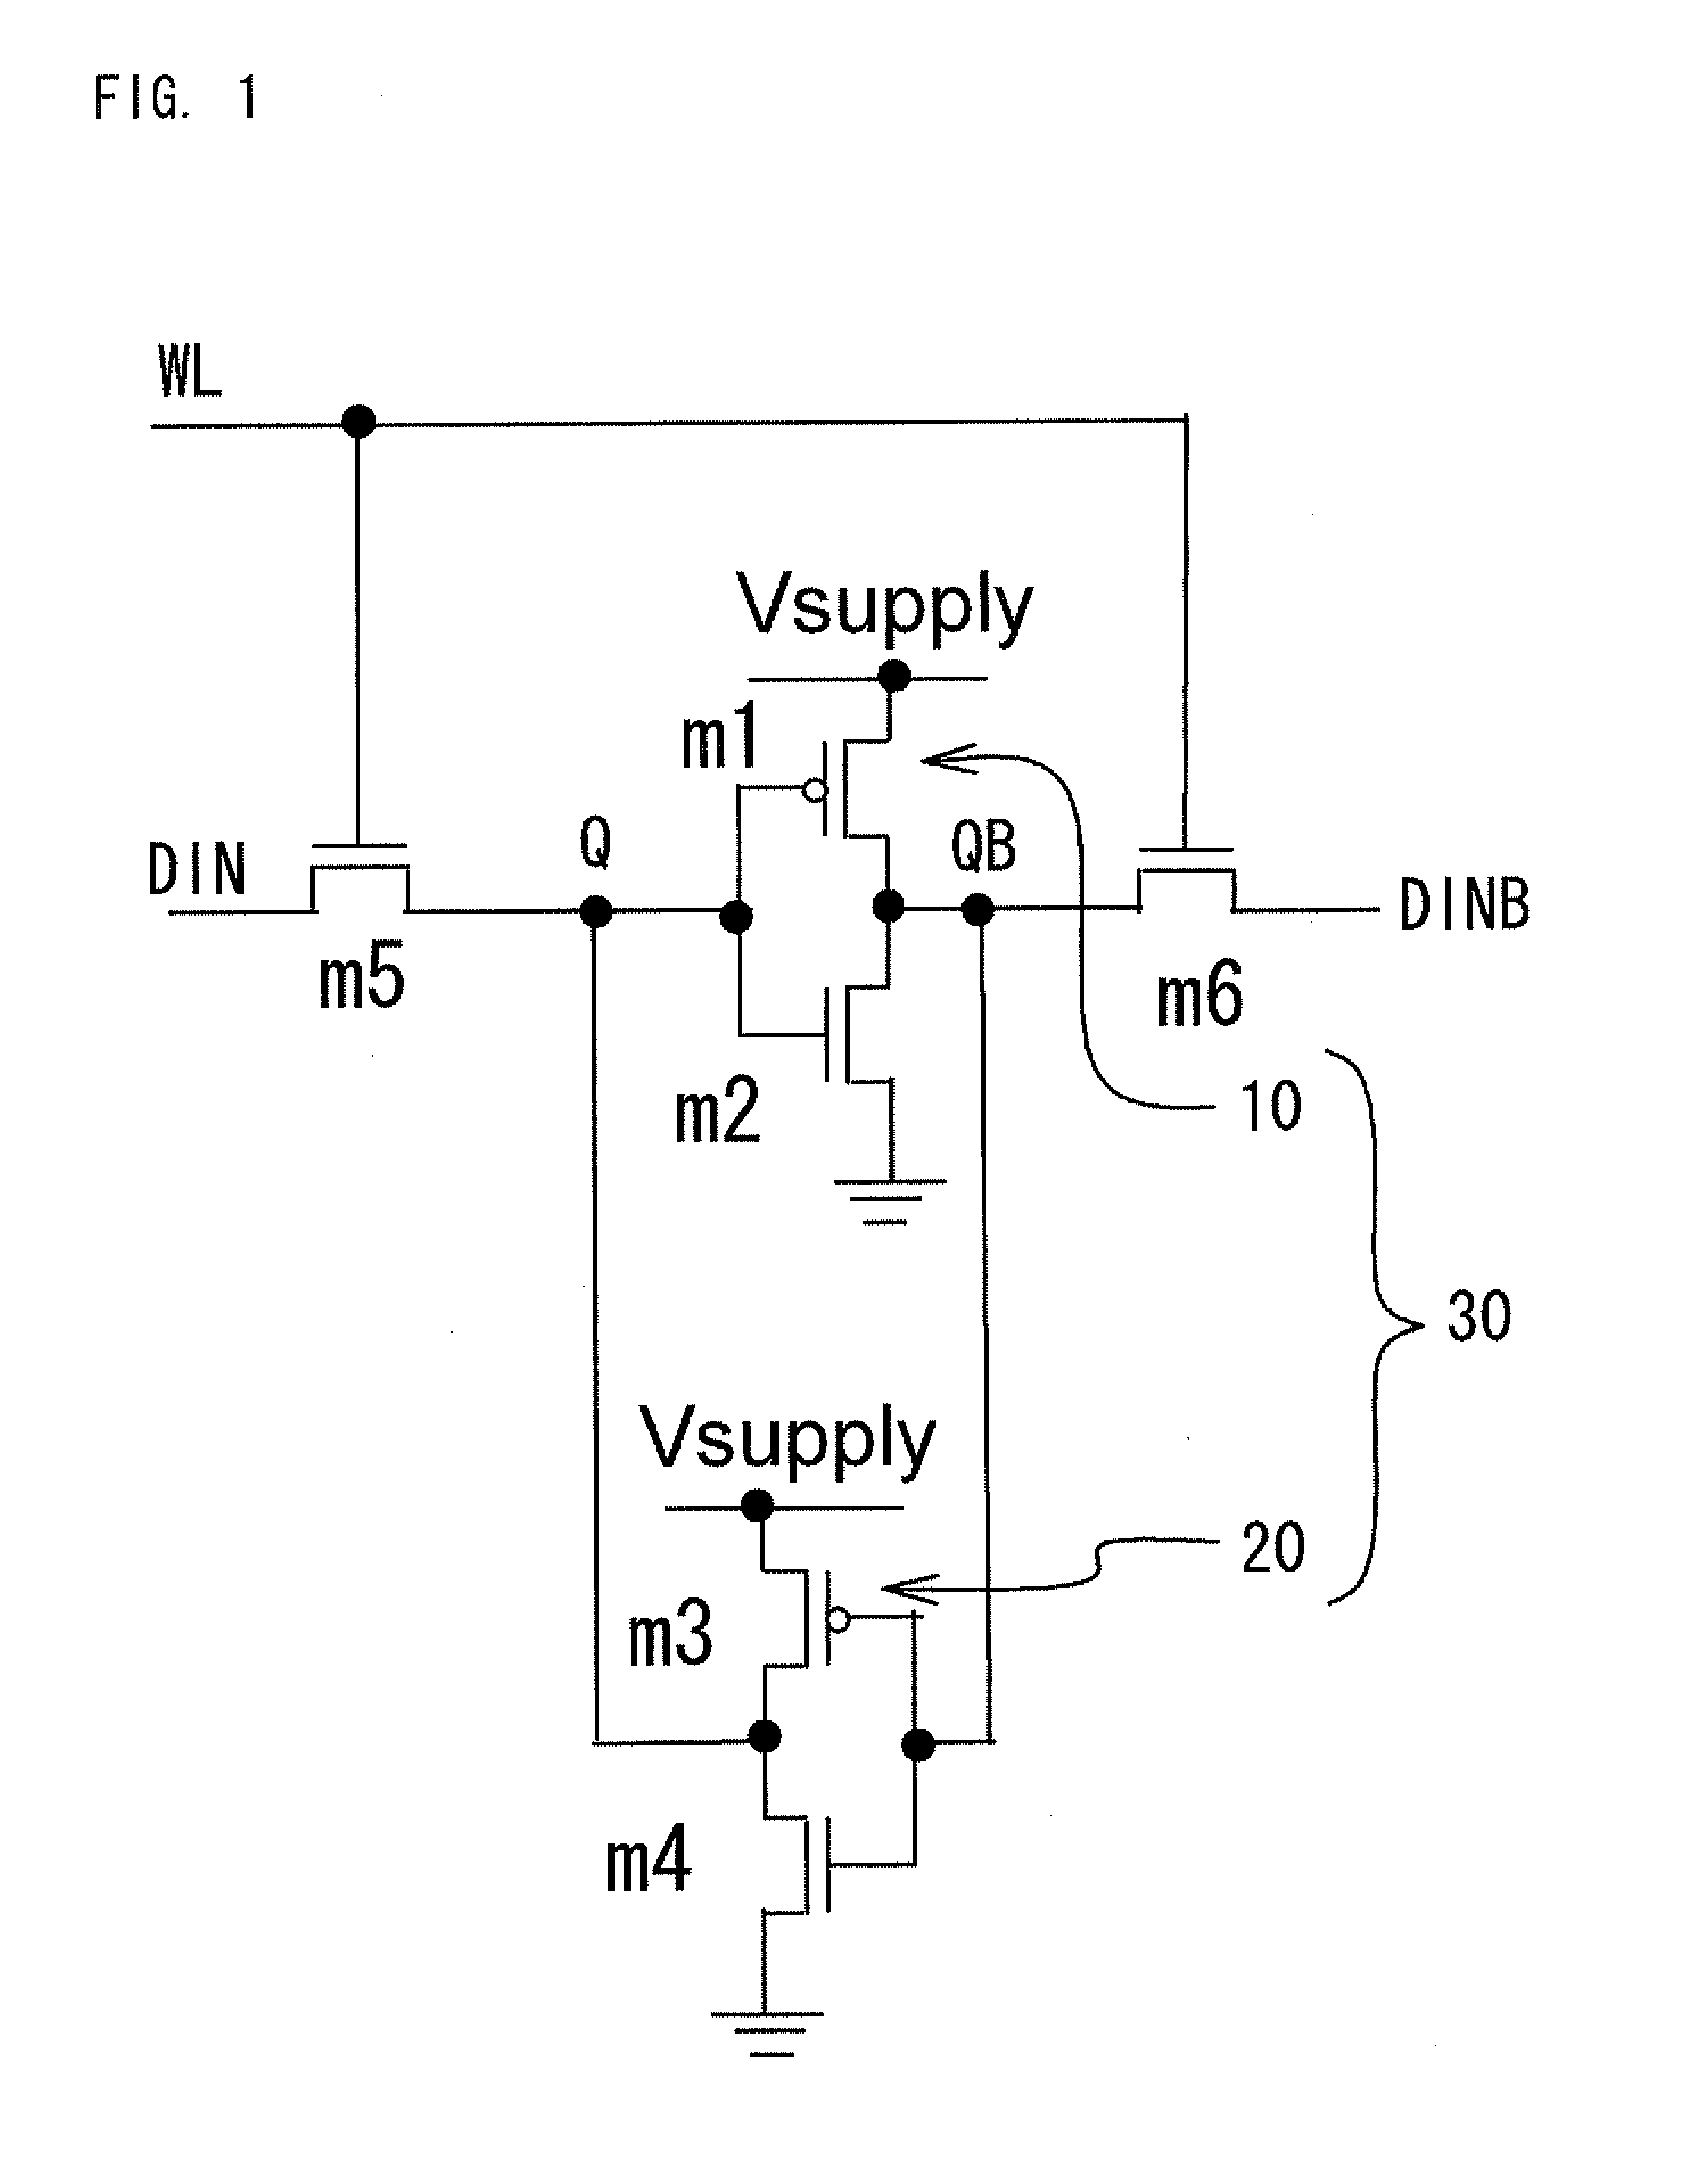 Nonvolatile sram/latch circuit using current-induced magnetization reversal mtj